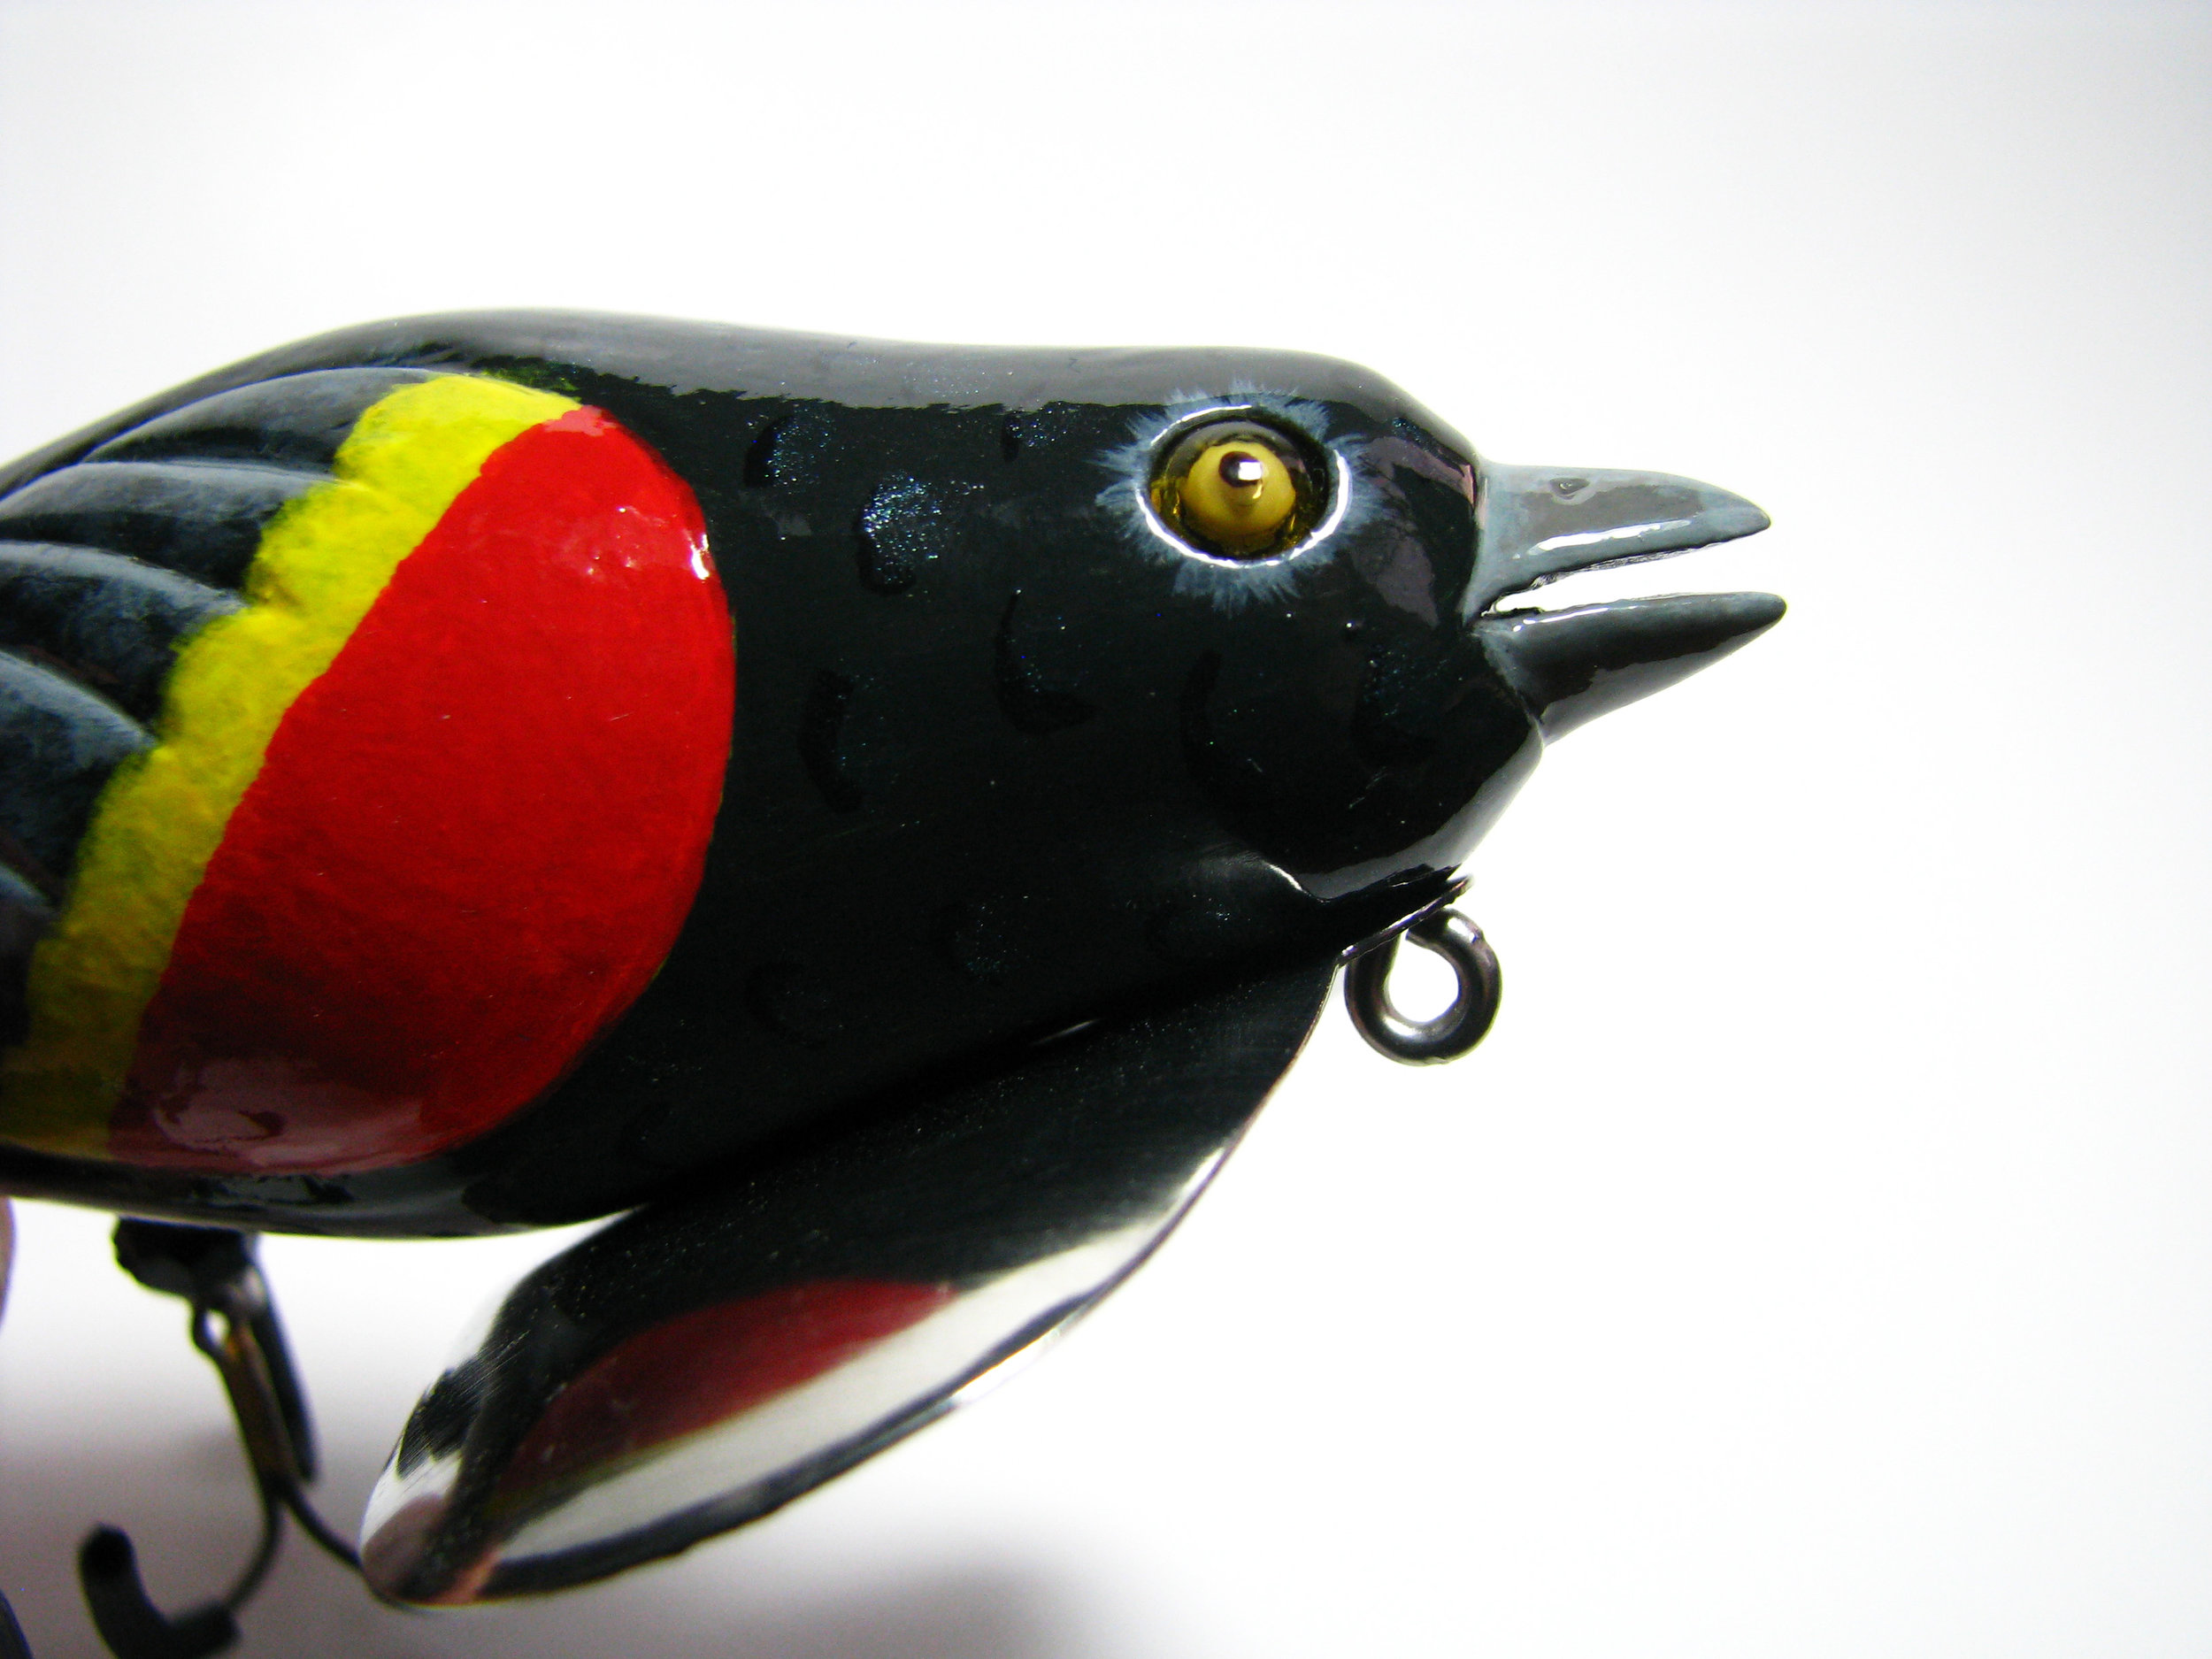 Jitterbird #2 — The Chautauqua Bait Company